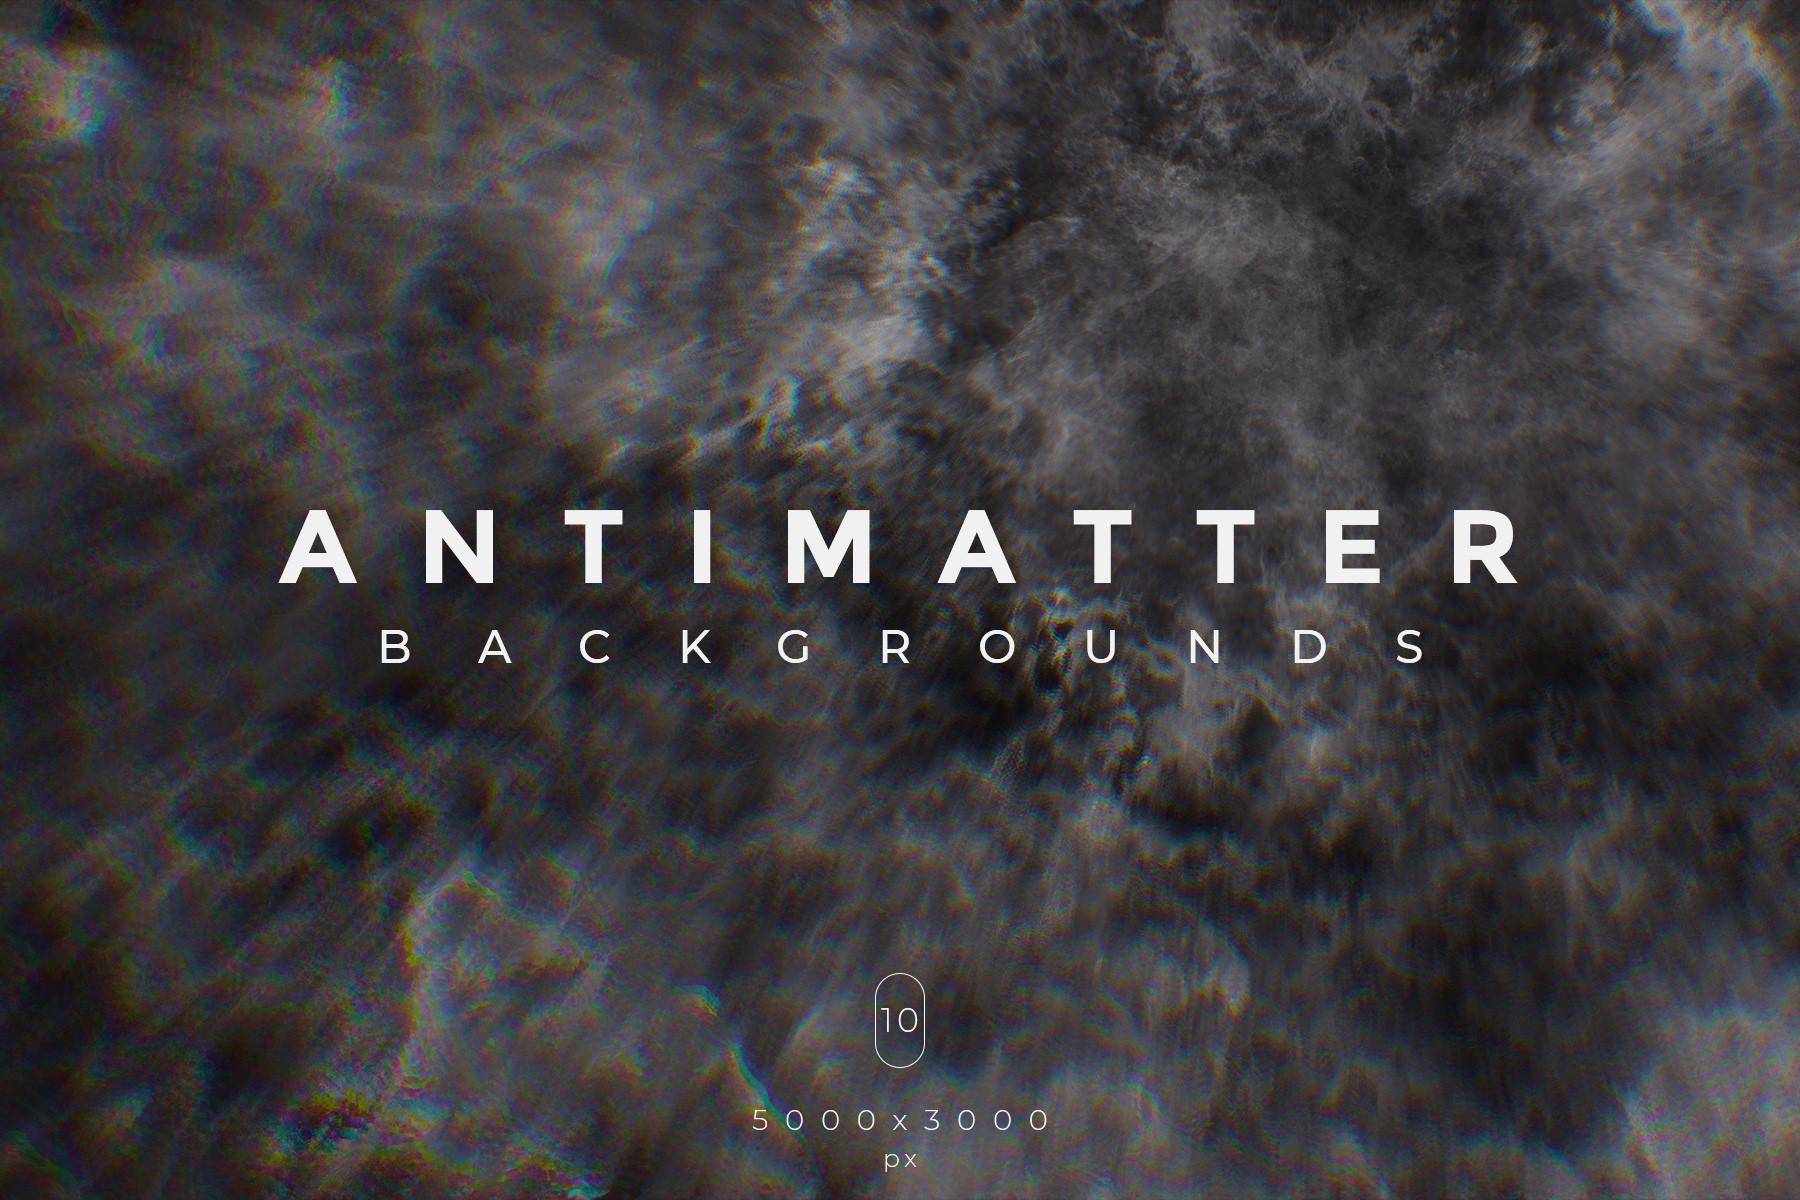 Antimatter Backgrounds